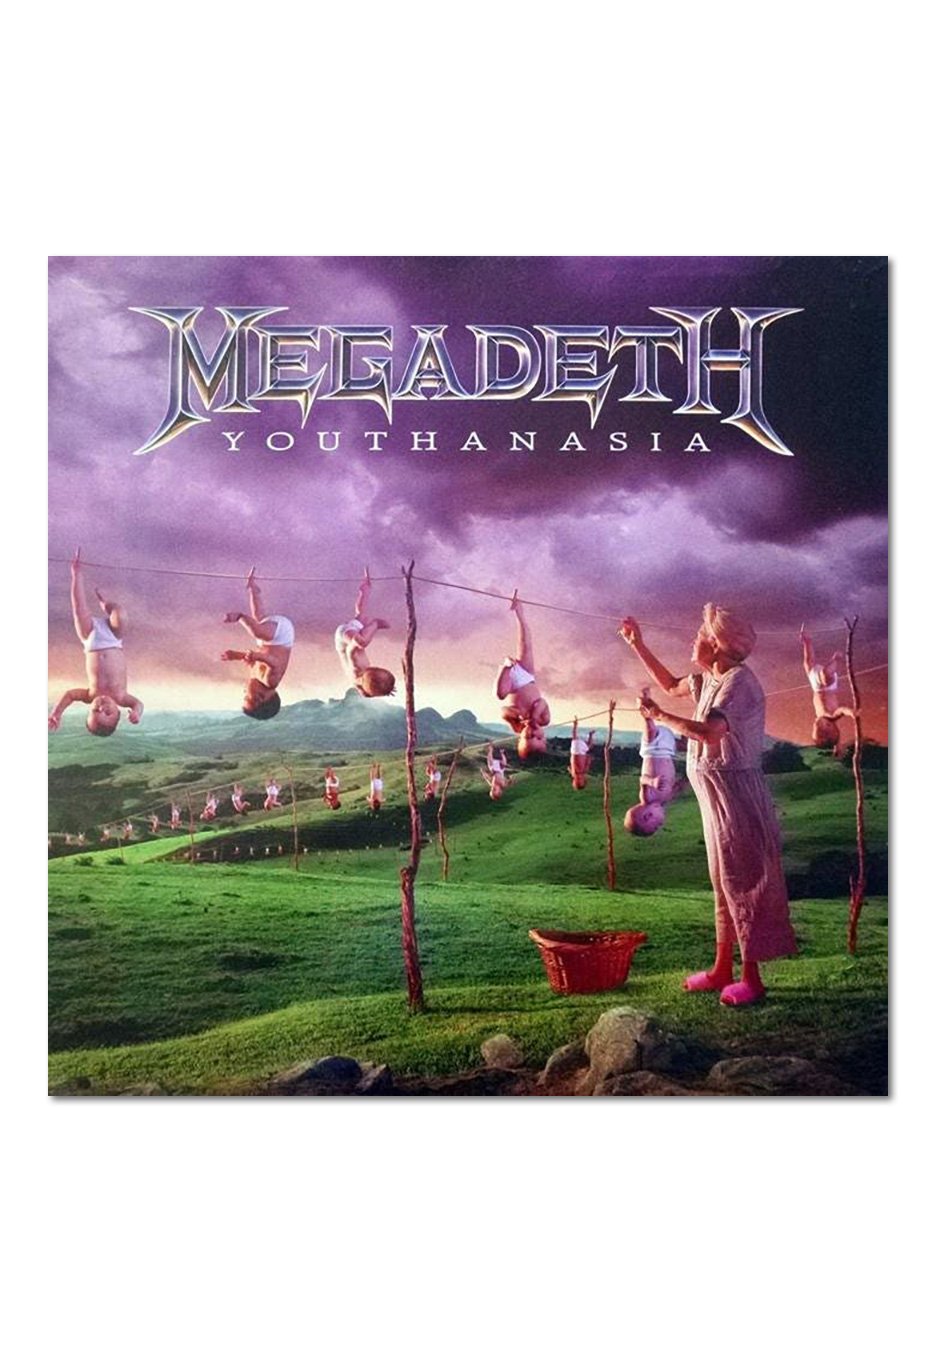 Megadeth - Youthanasia Remastered - CD